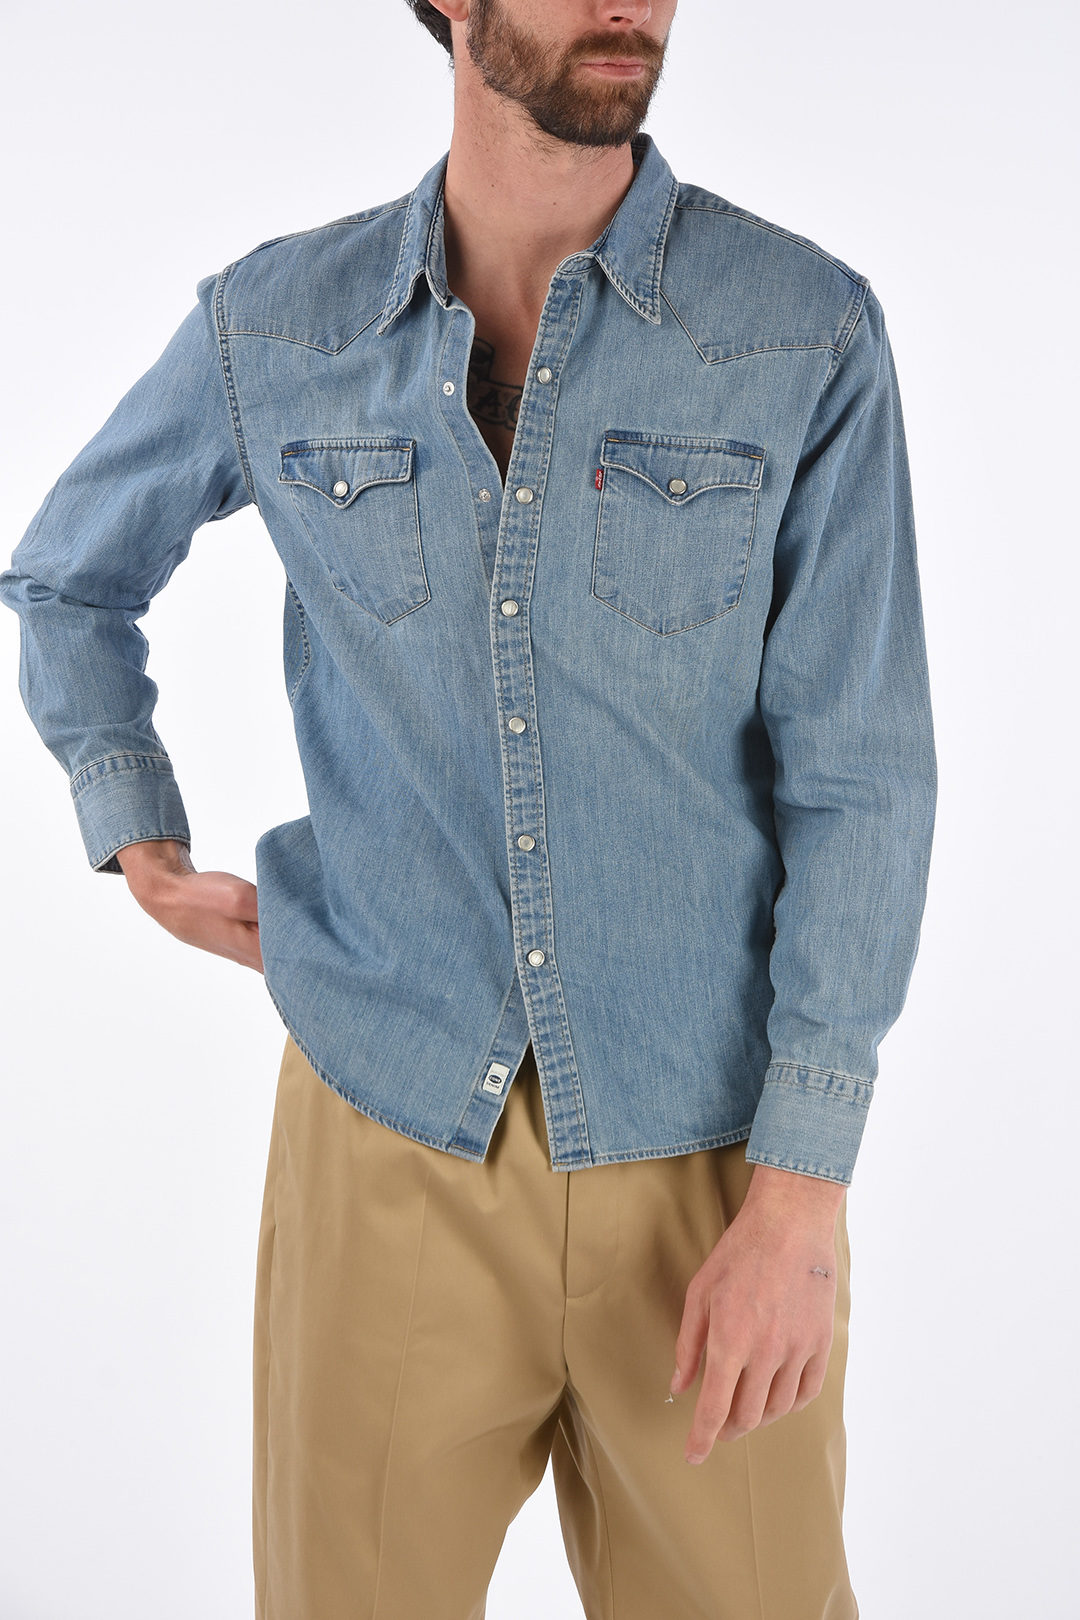 Levi's Denim Snap Button Shirt men - Glamood Outlet